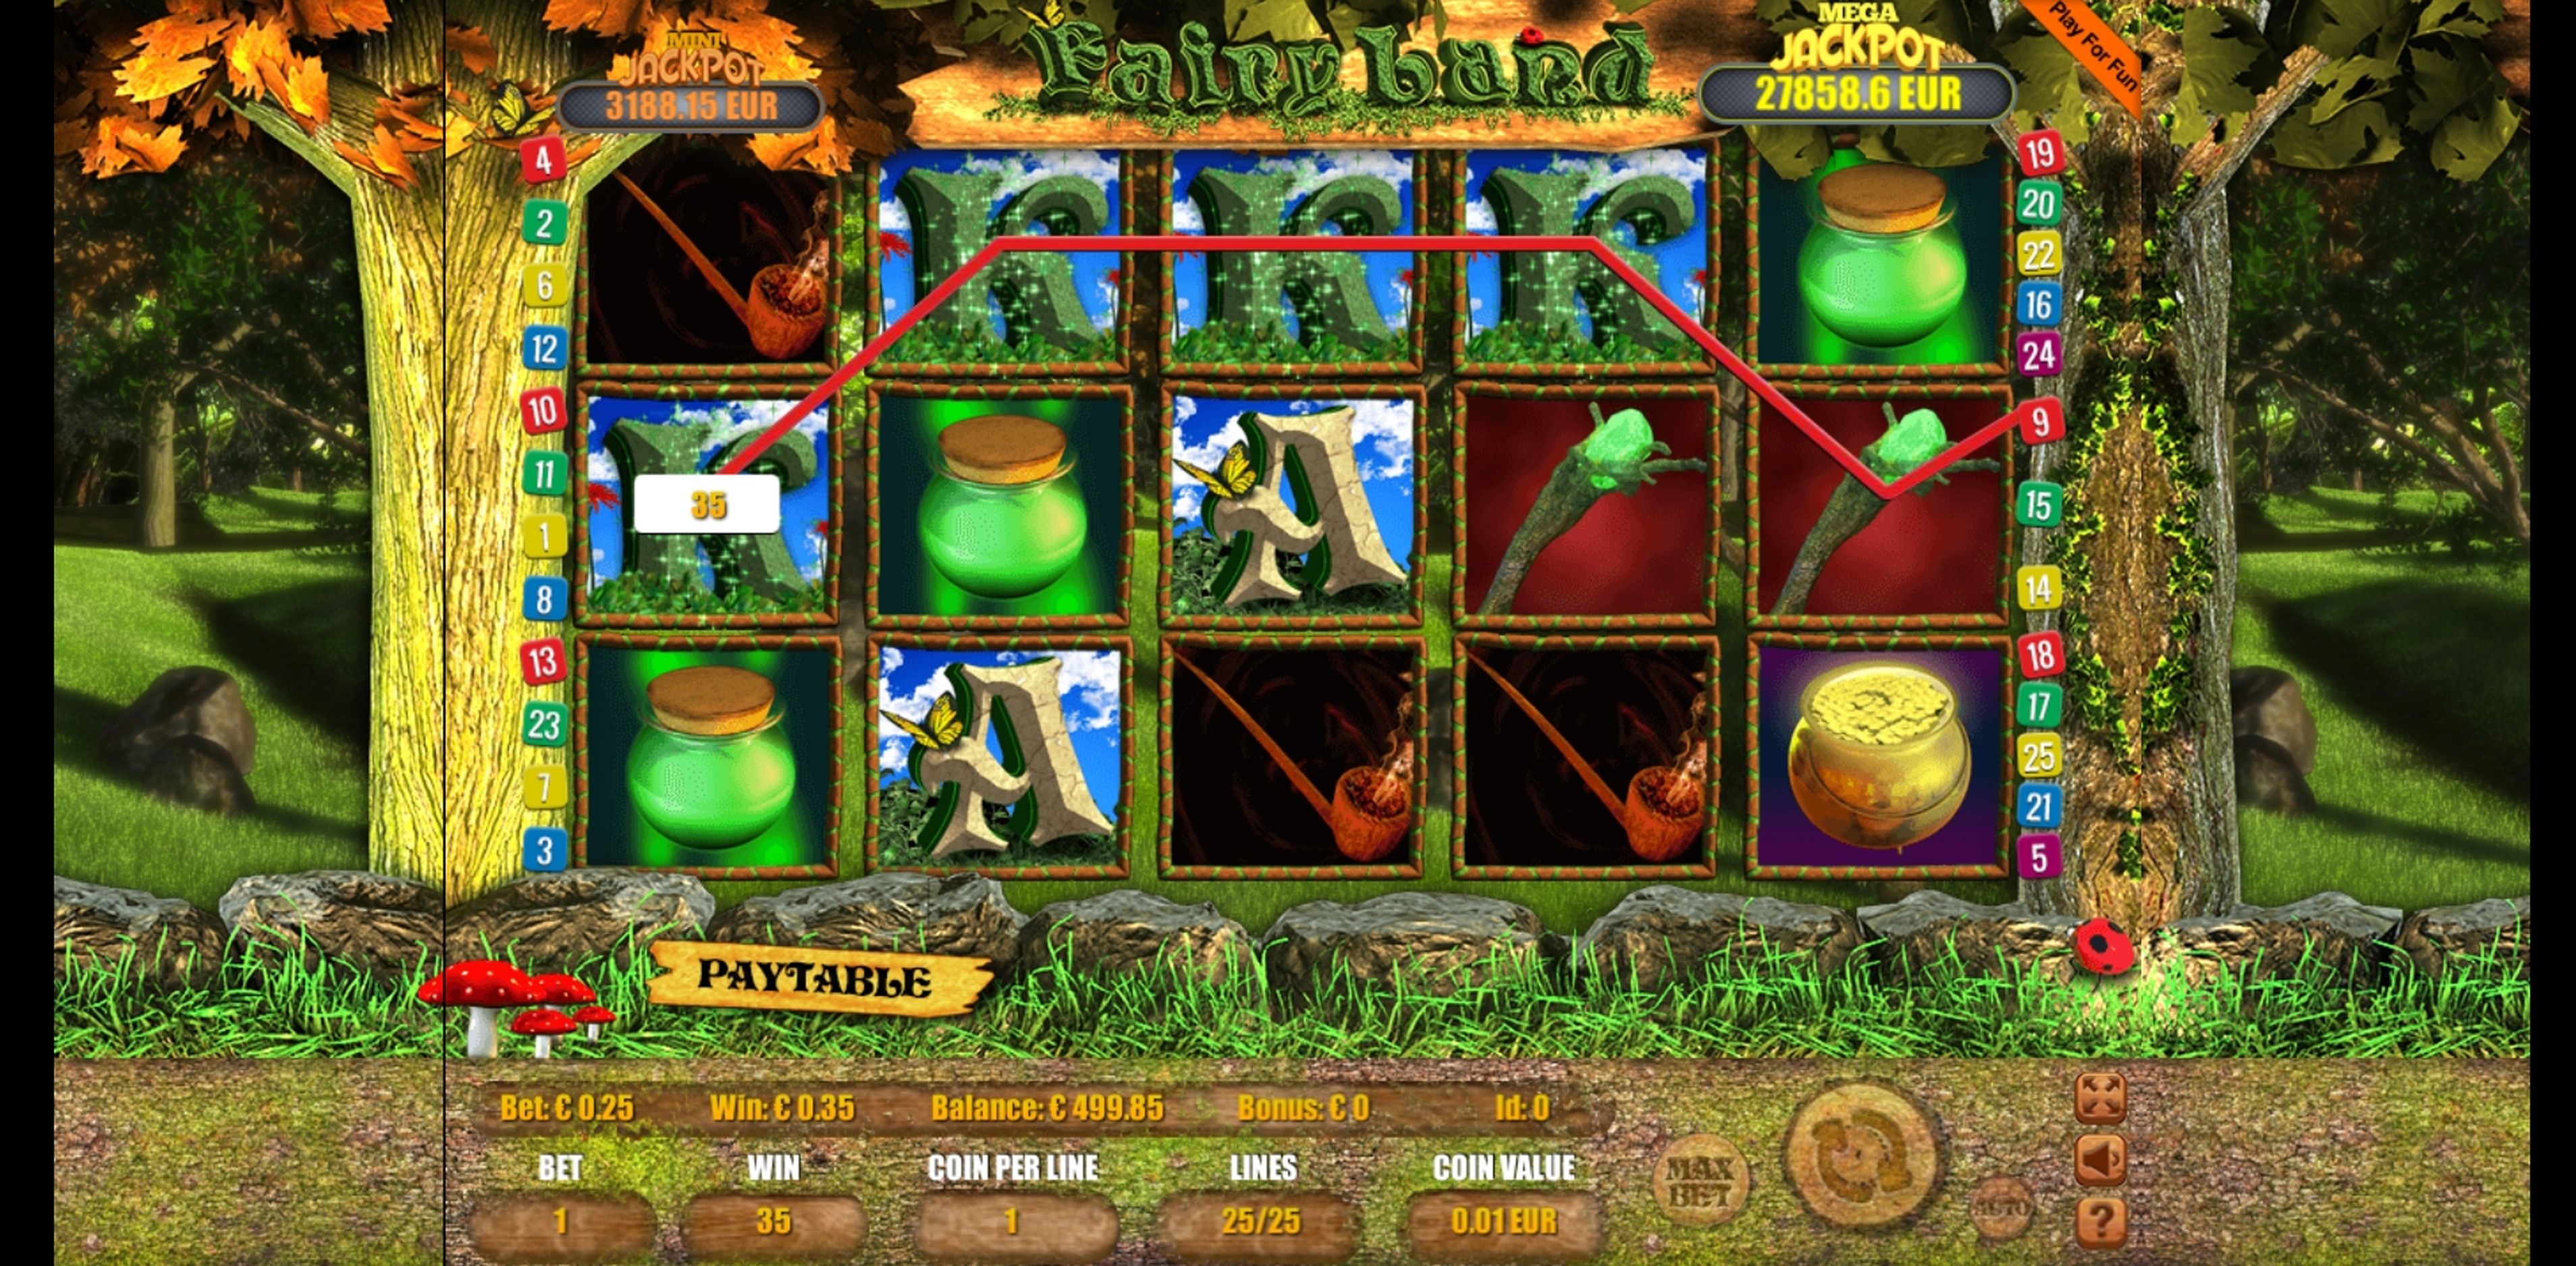 Win Money in Fairyland Free Slot Game by bluberi